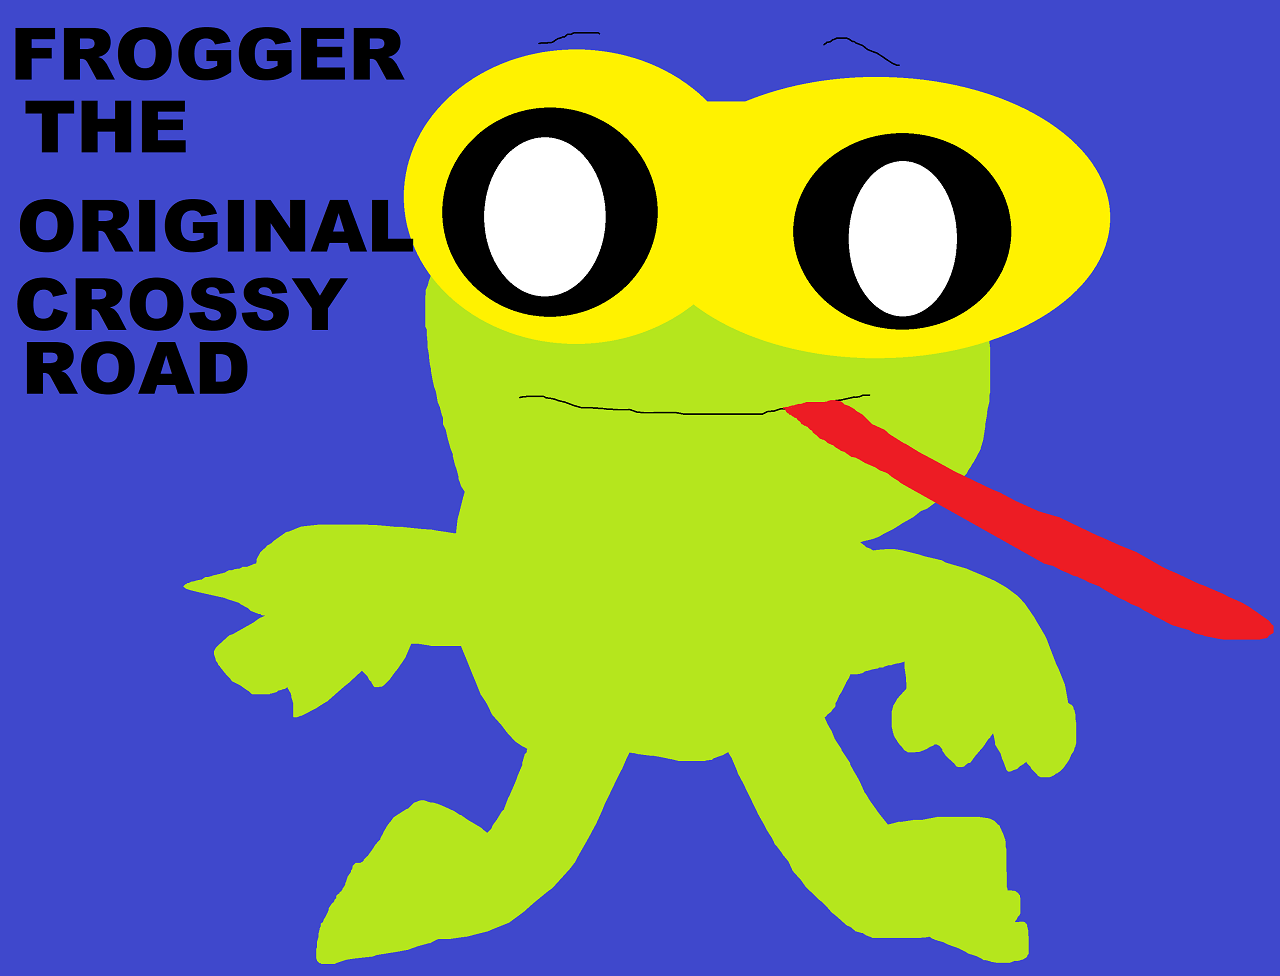 Frogger The Original CrossyRoad by Falconlobo